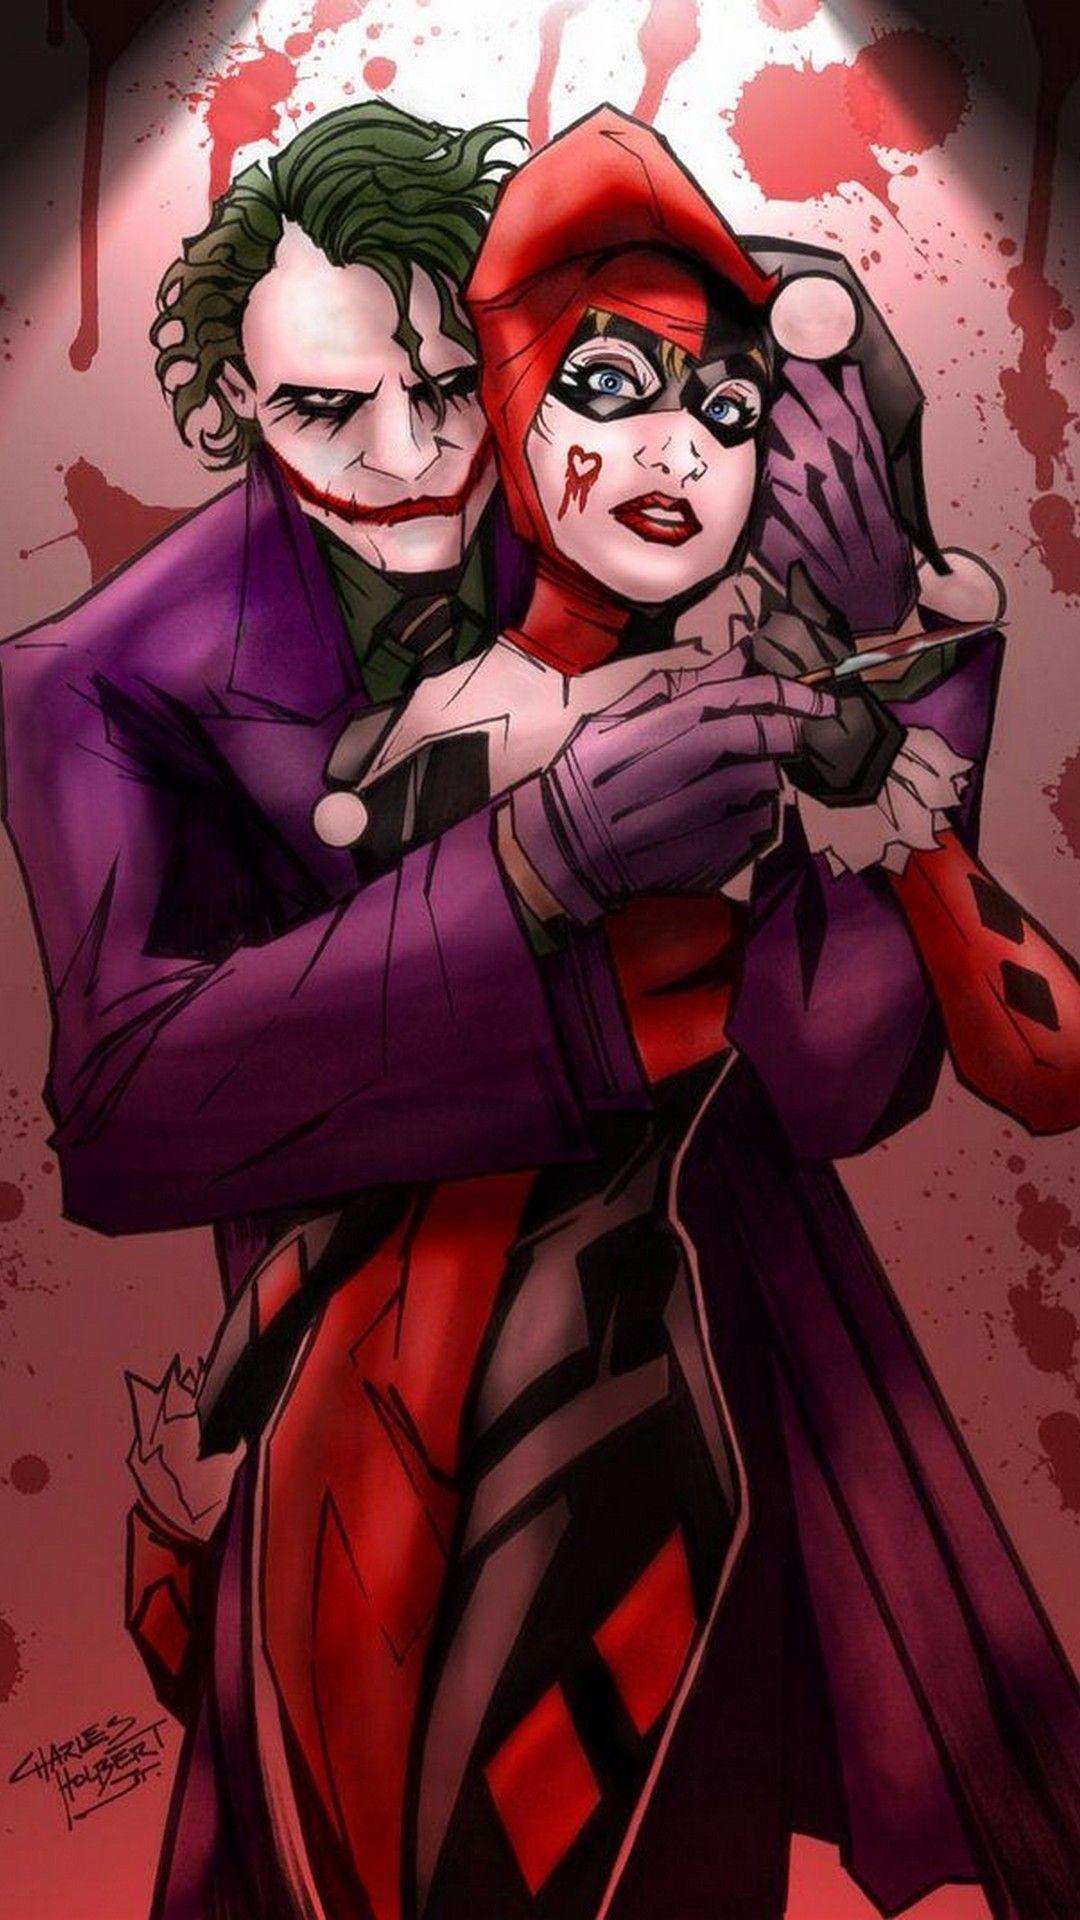 1080x1920 Joker And Harley Hình nền iPhone.  2019 Hình nền iPhone 3D